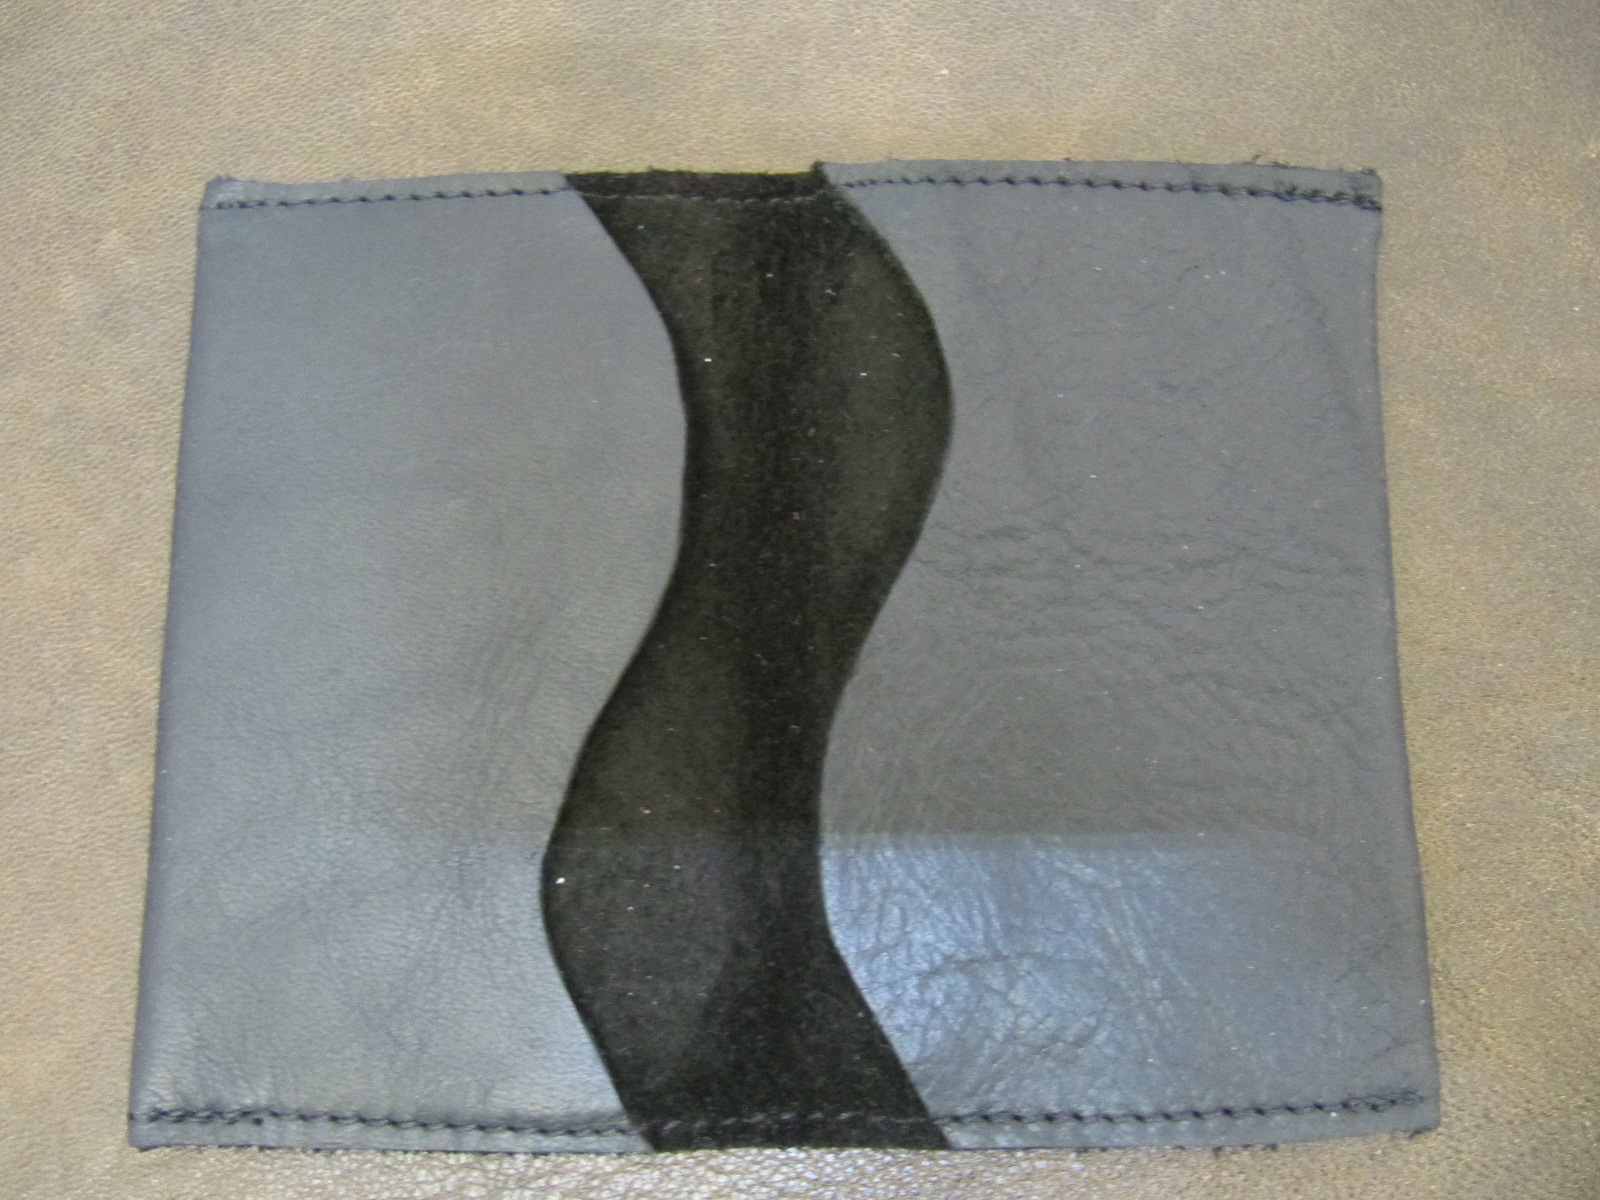 Leather Card Wallet - Black